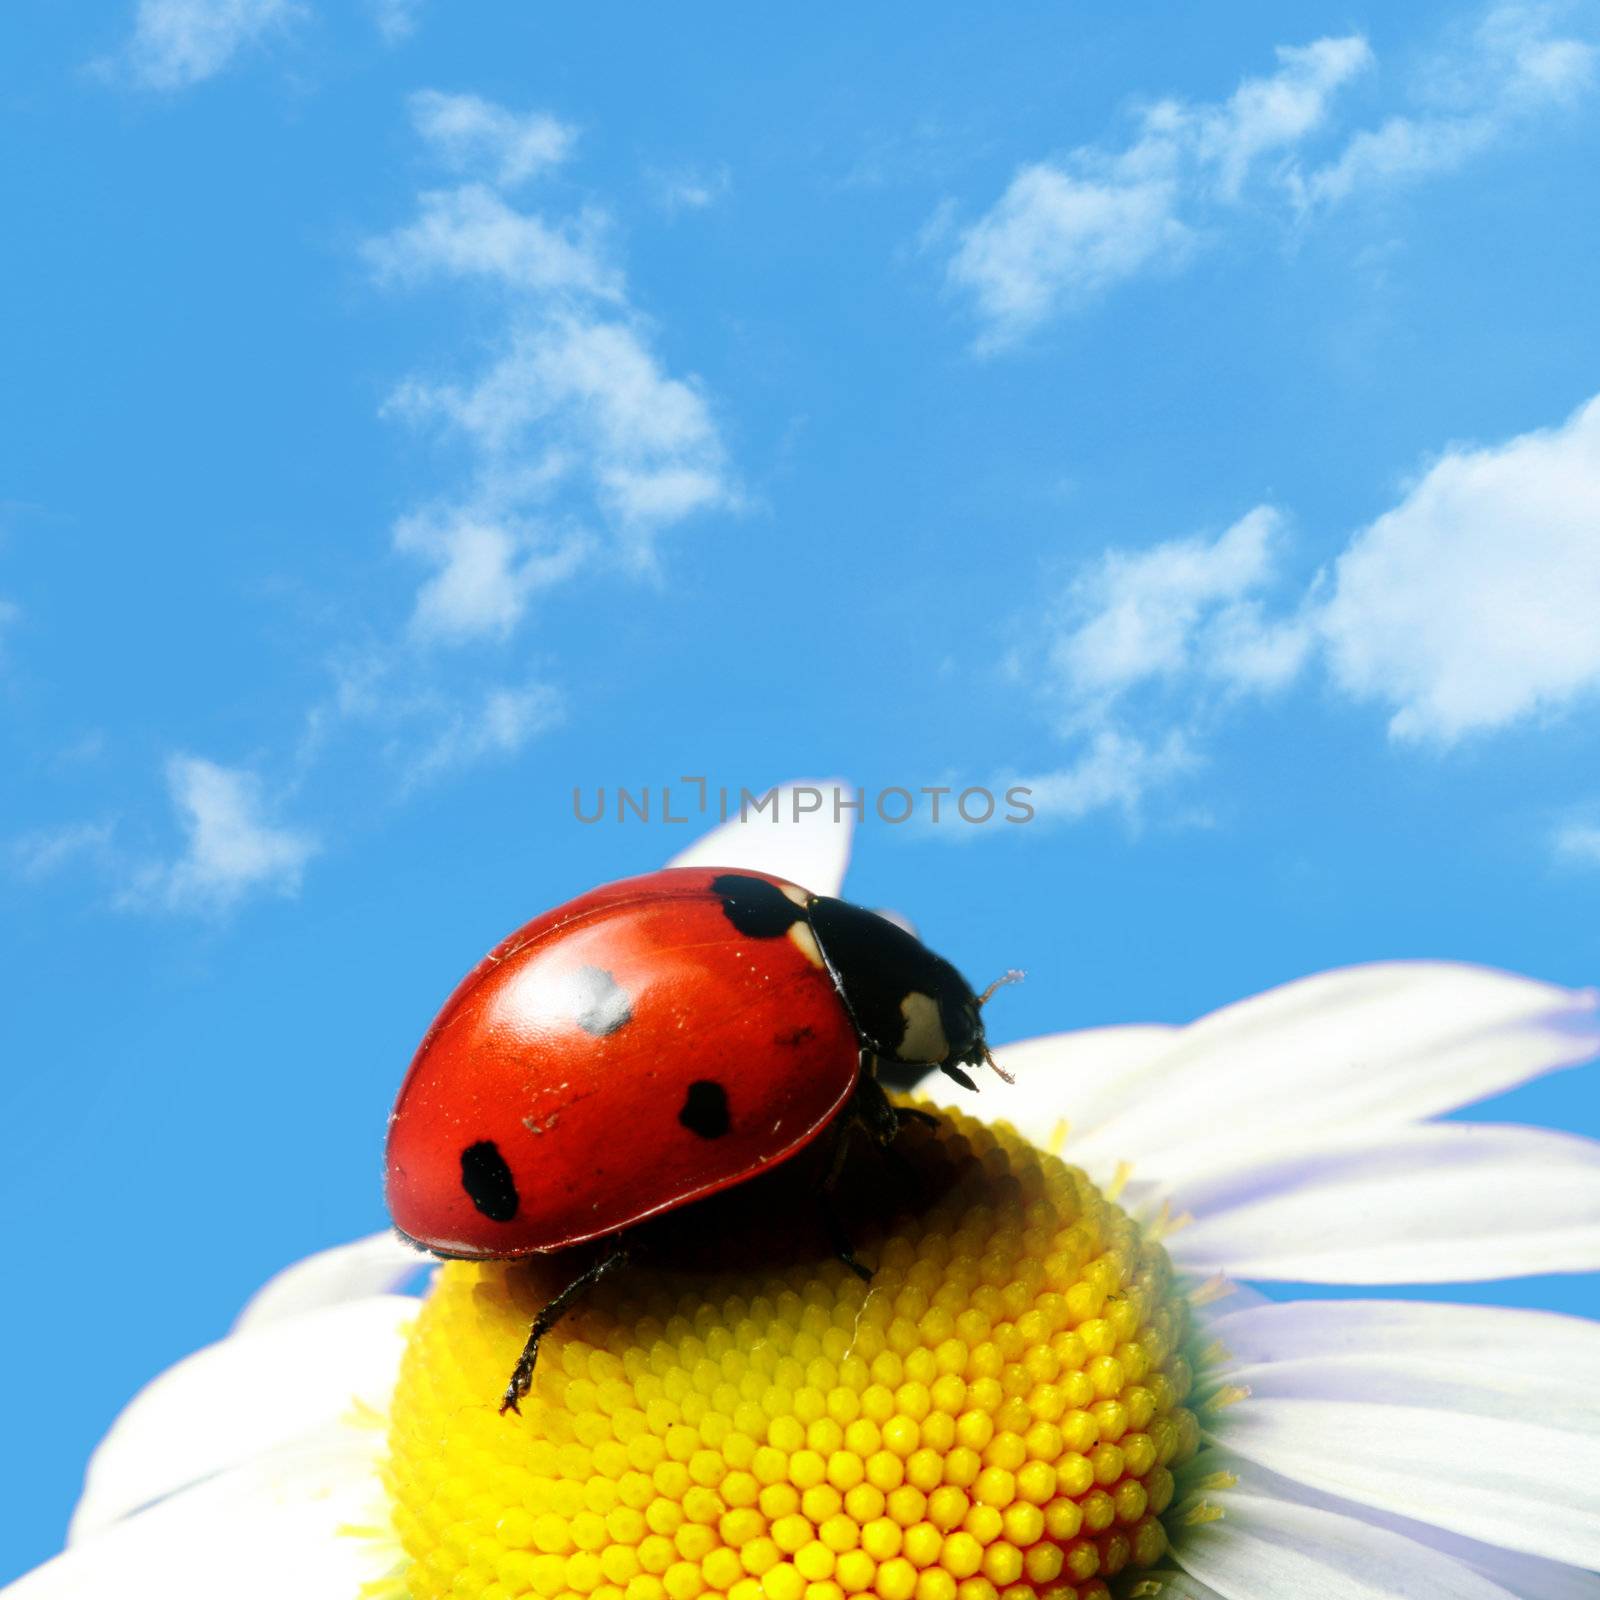 red summer ladybug on camomile under blue sky